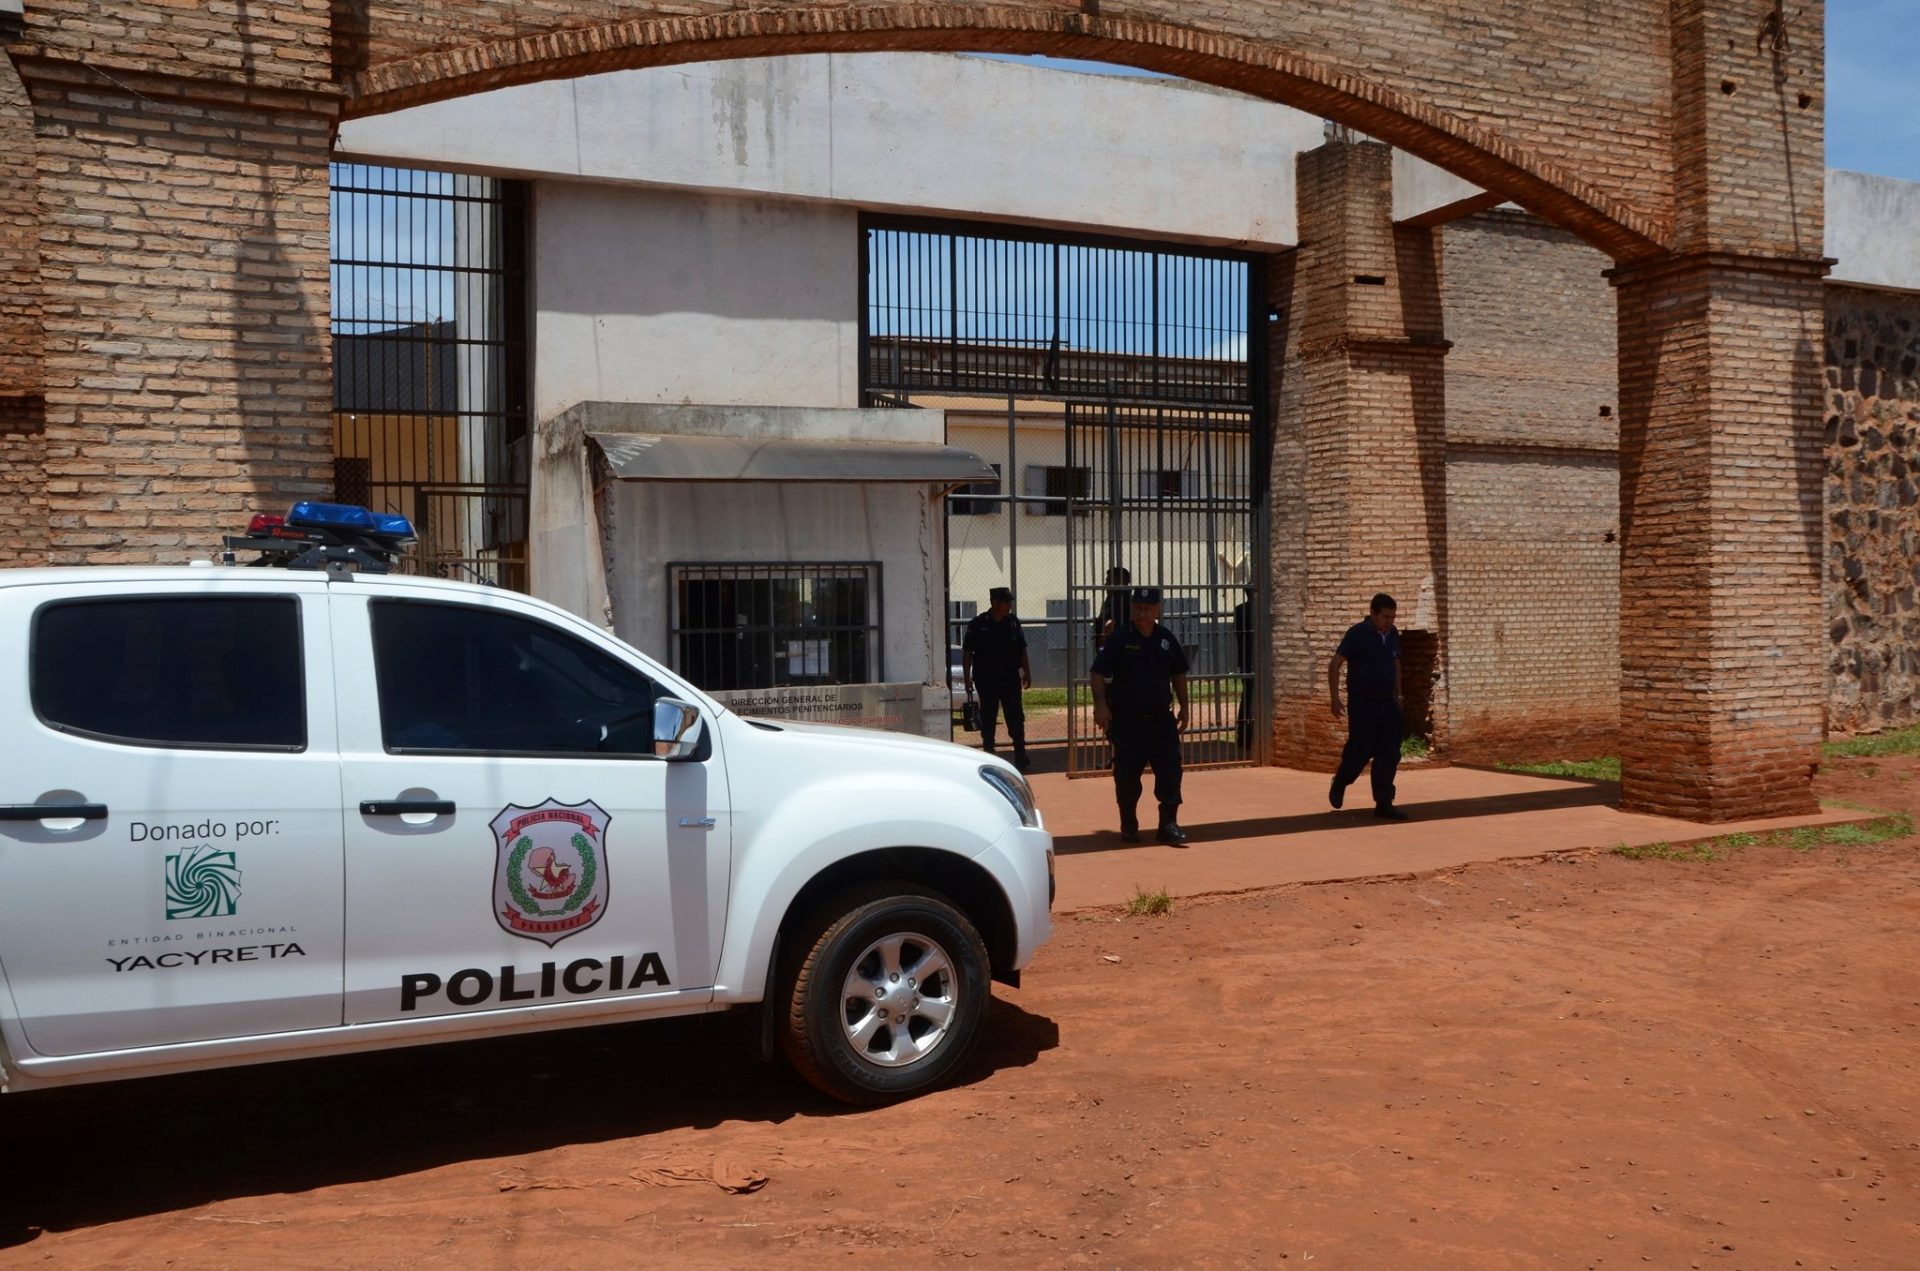 Video of Inmates Escaping Brazil Jails Ahead of Corona Virus Lock-down